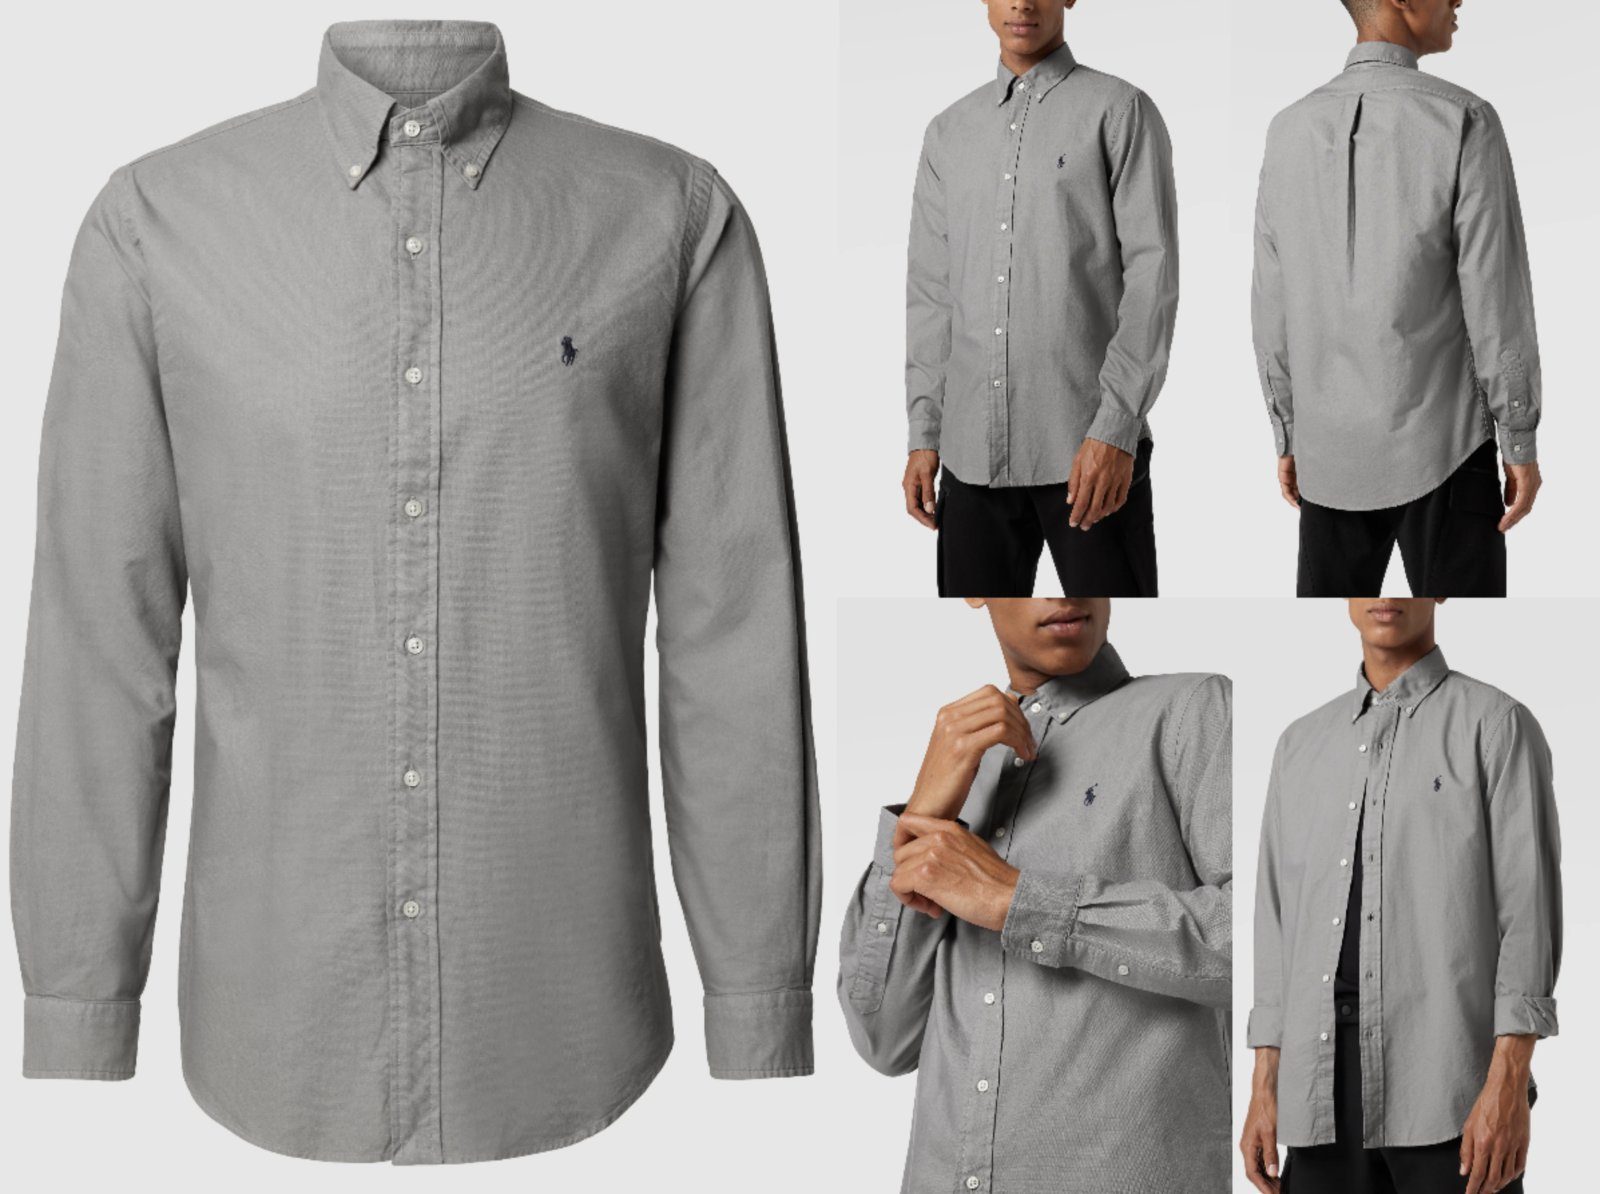 Ralph Lauren Langarmhemd POLO RALPH LAUREN Shirt Hemd Heritage Garment Dye Buttondown Retro Reg